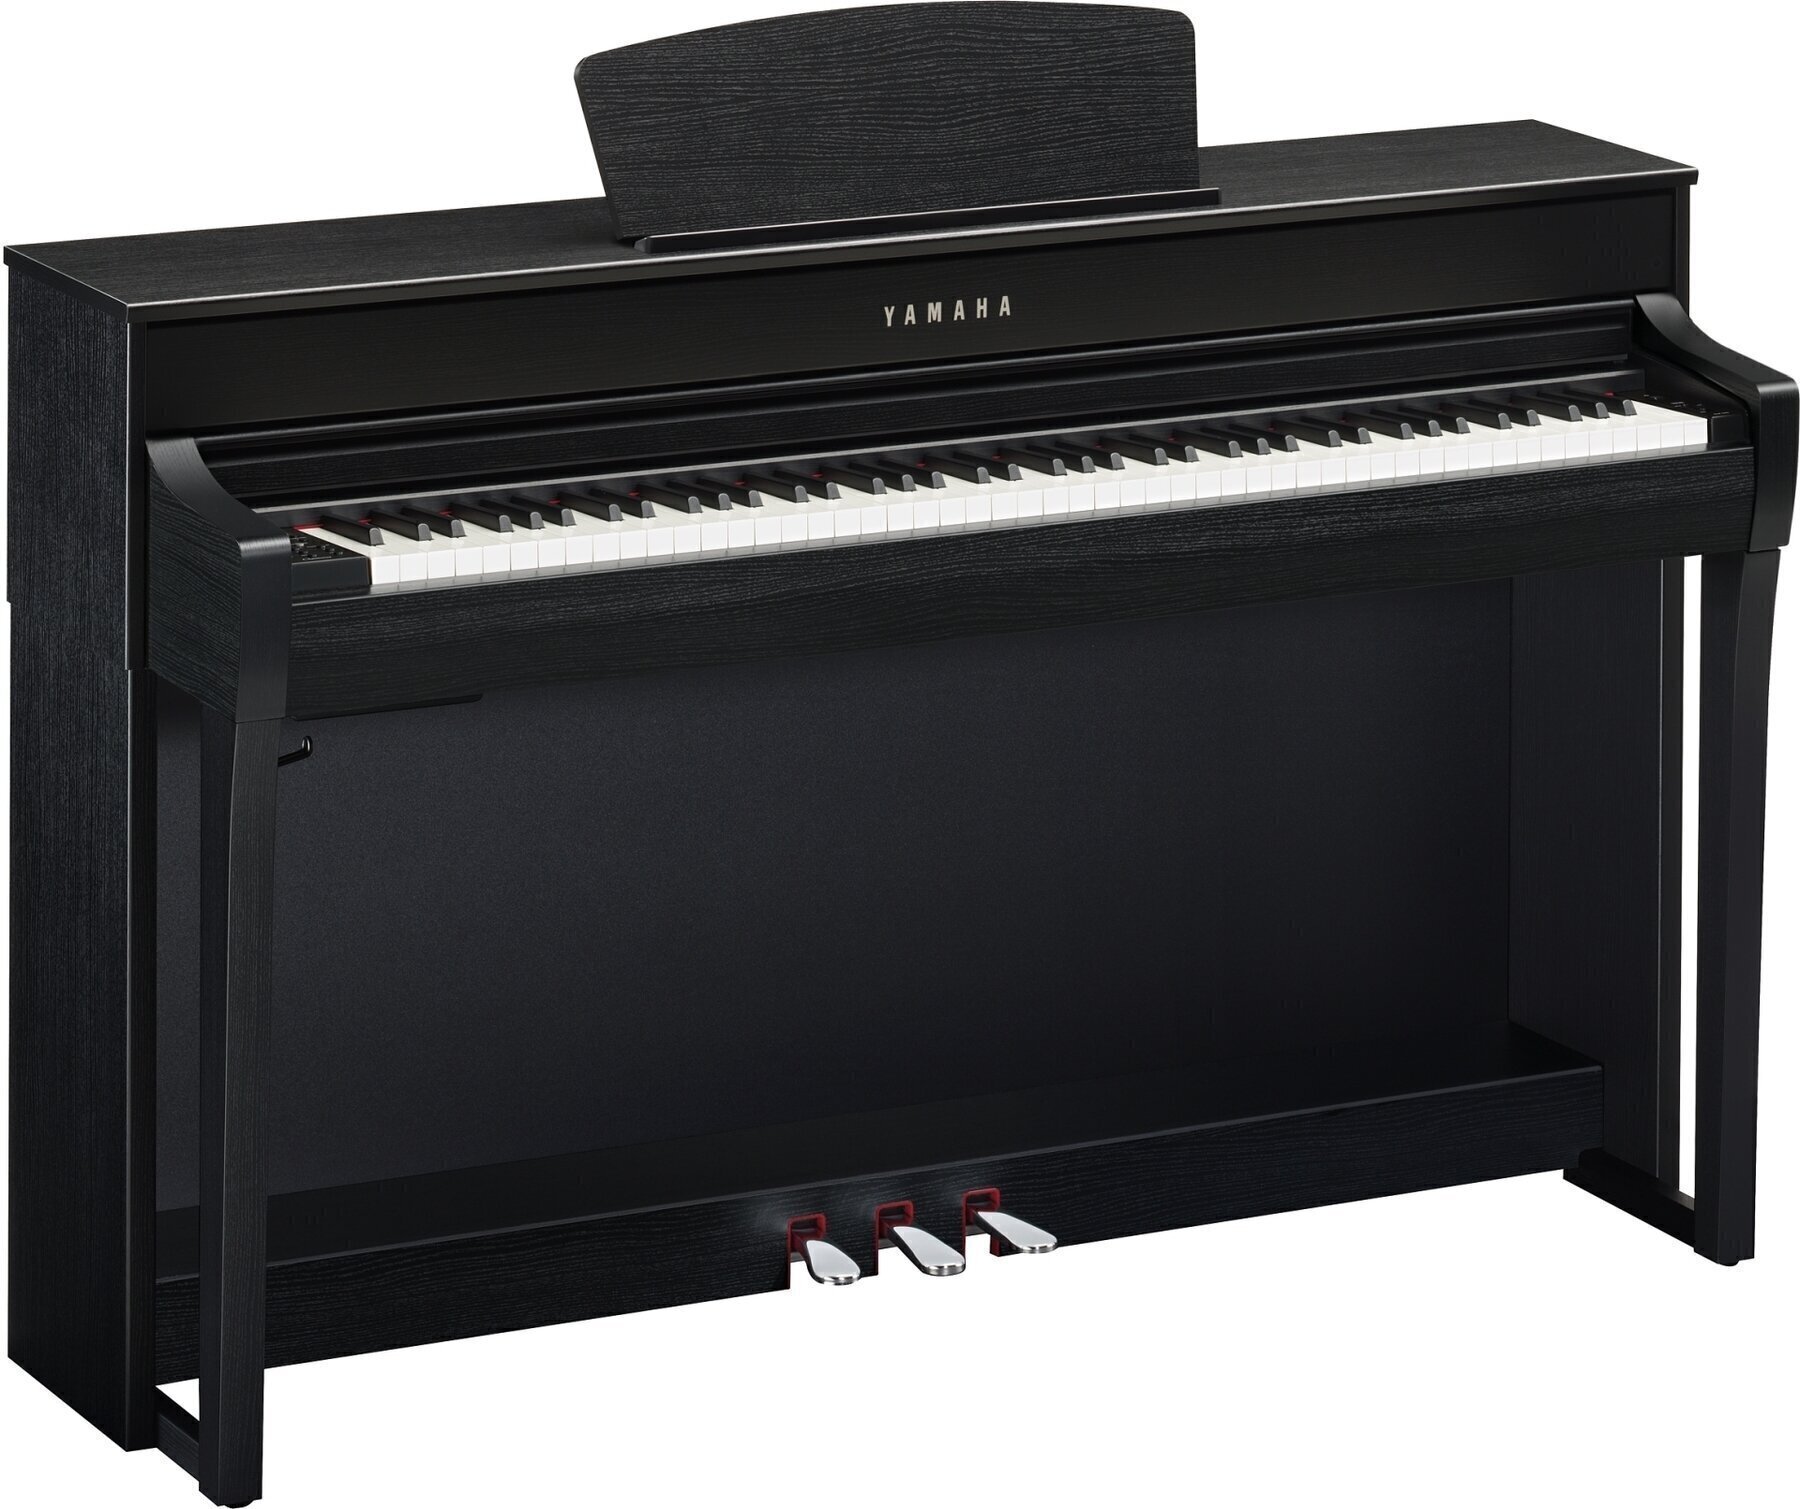 Digital Piano Yamaha CLP 735 Sort Digital Piano